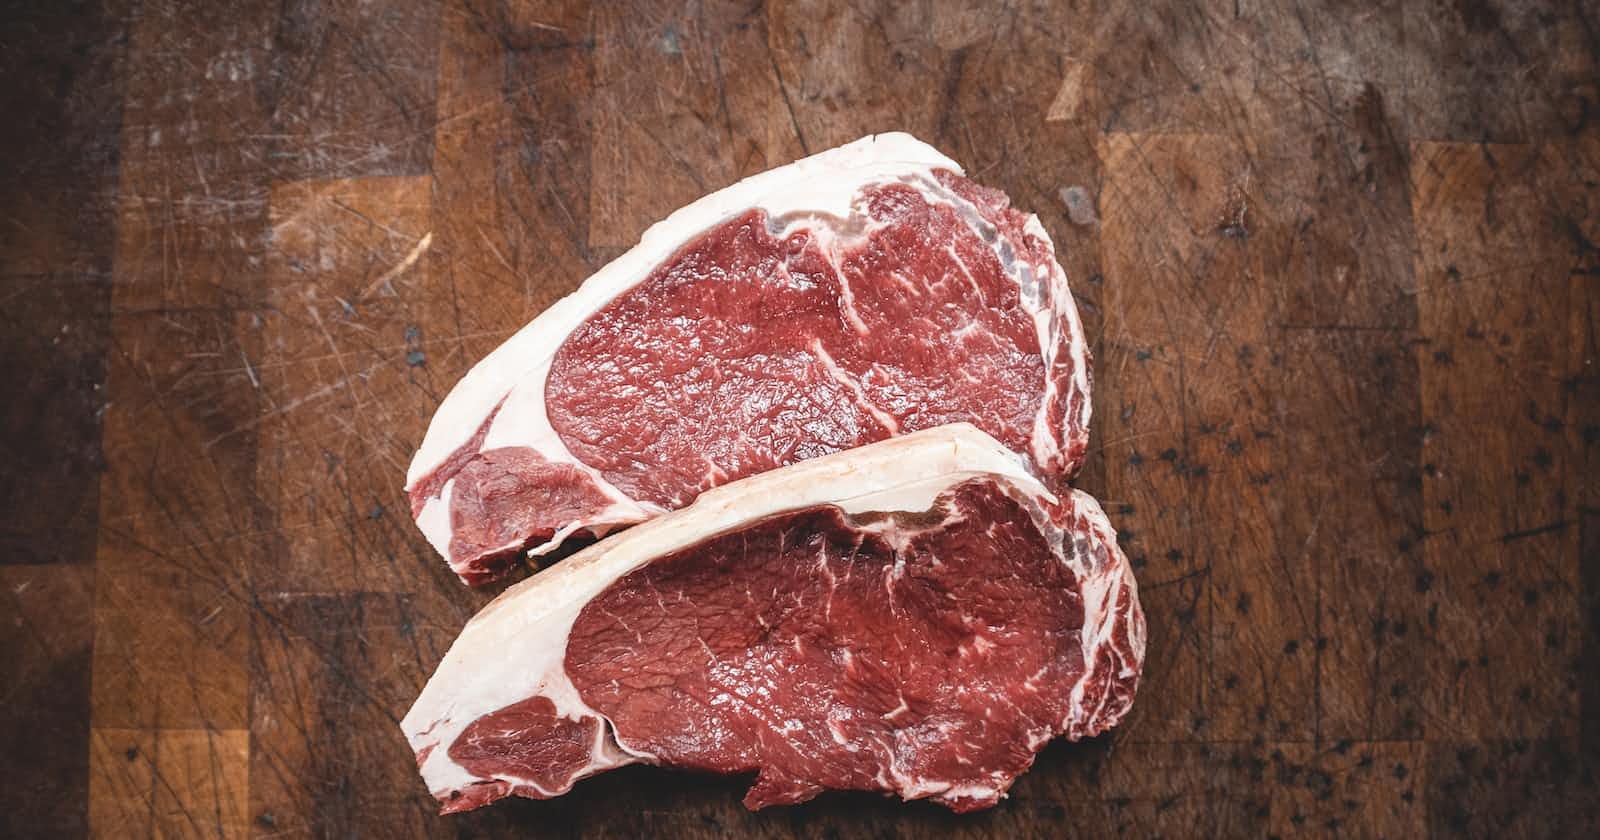 Benarkah Daging Kambing Menyebabkan Darah Tinggi?